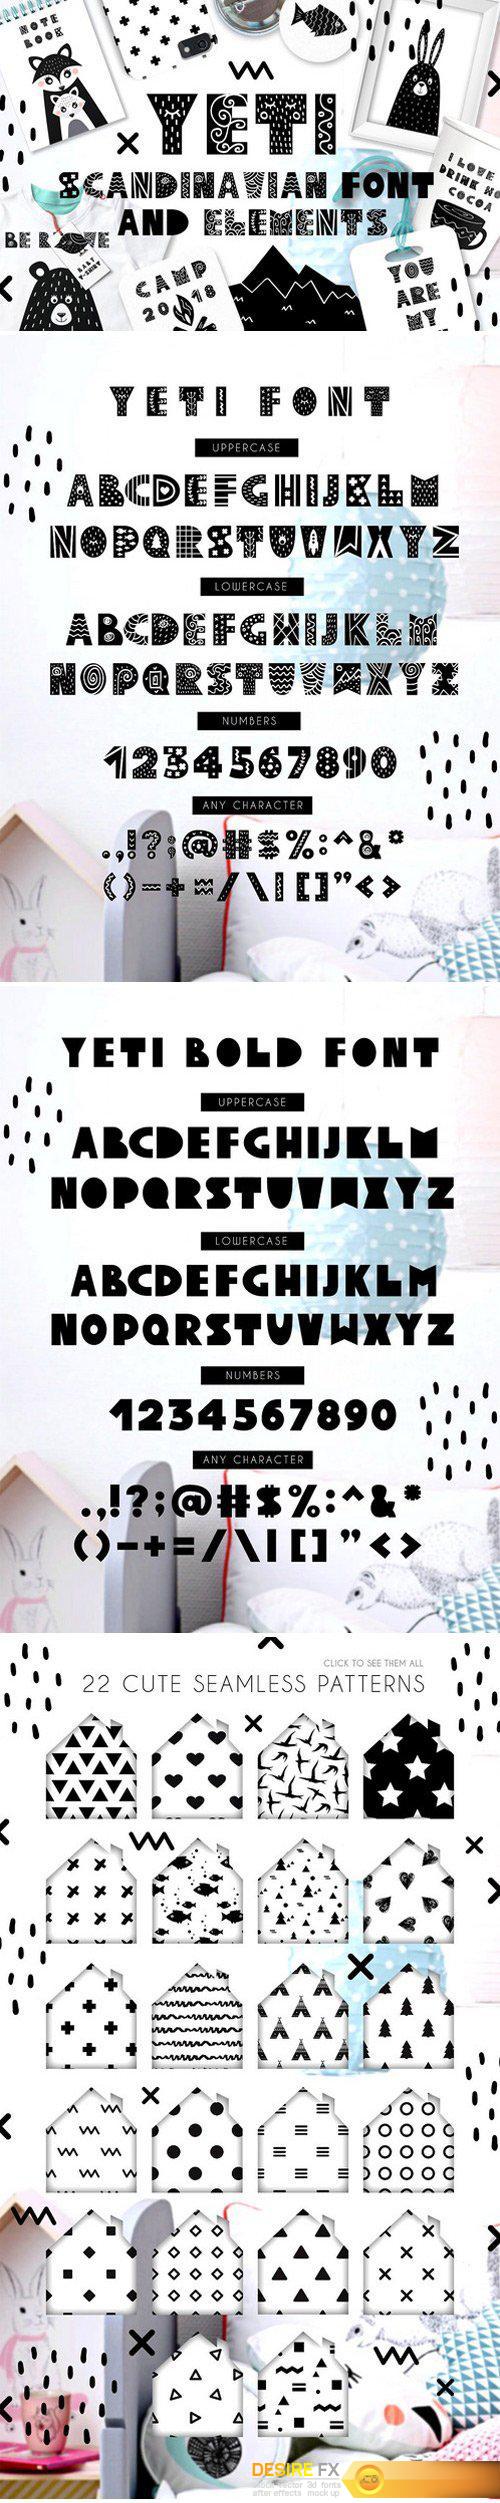 CM - Yeti - Scandinavian font & elements 2042753